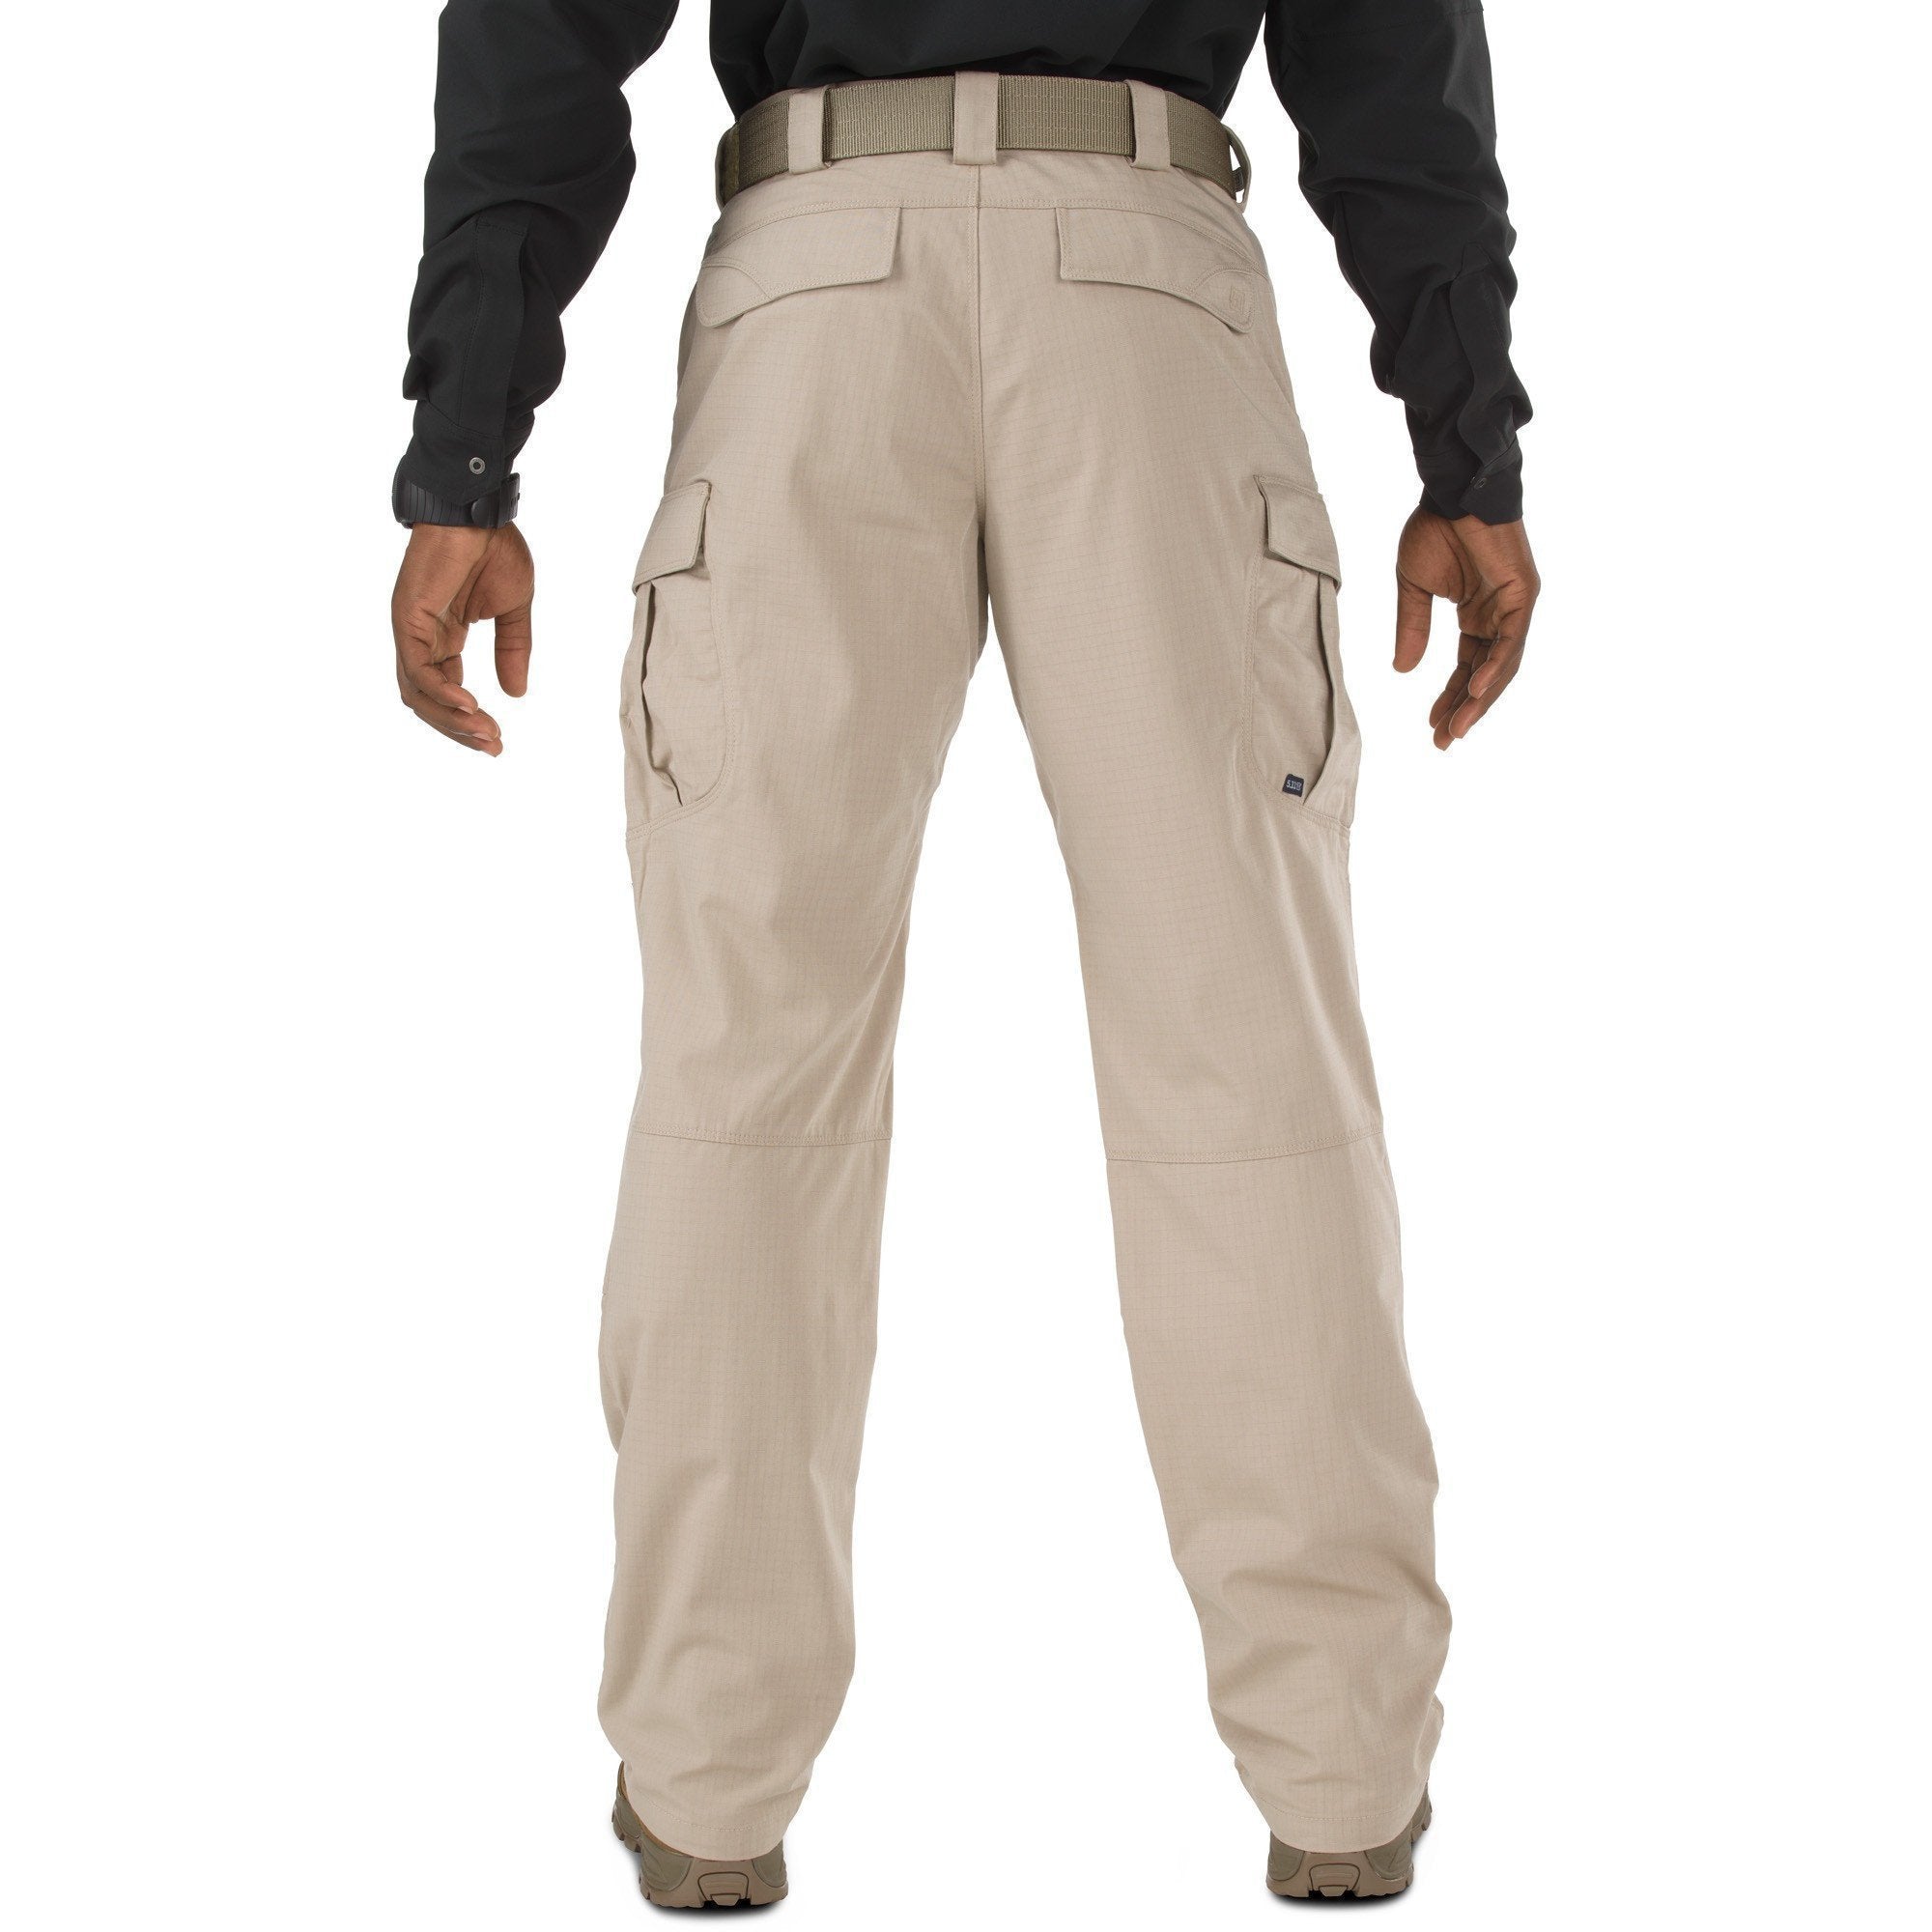 5.11 Tactical Stryke Pants with Flex-Tac - Khaki Pants 5.11 Tactical Tactical Gear Supplier Tactical Distributors Australia